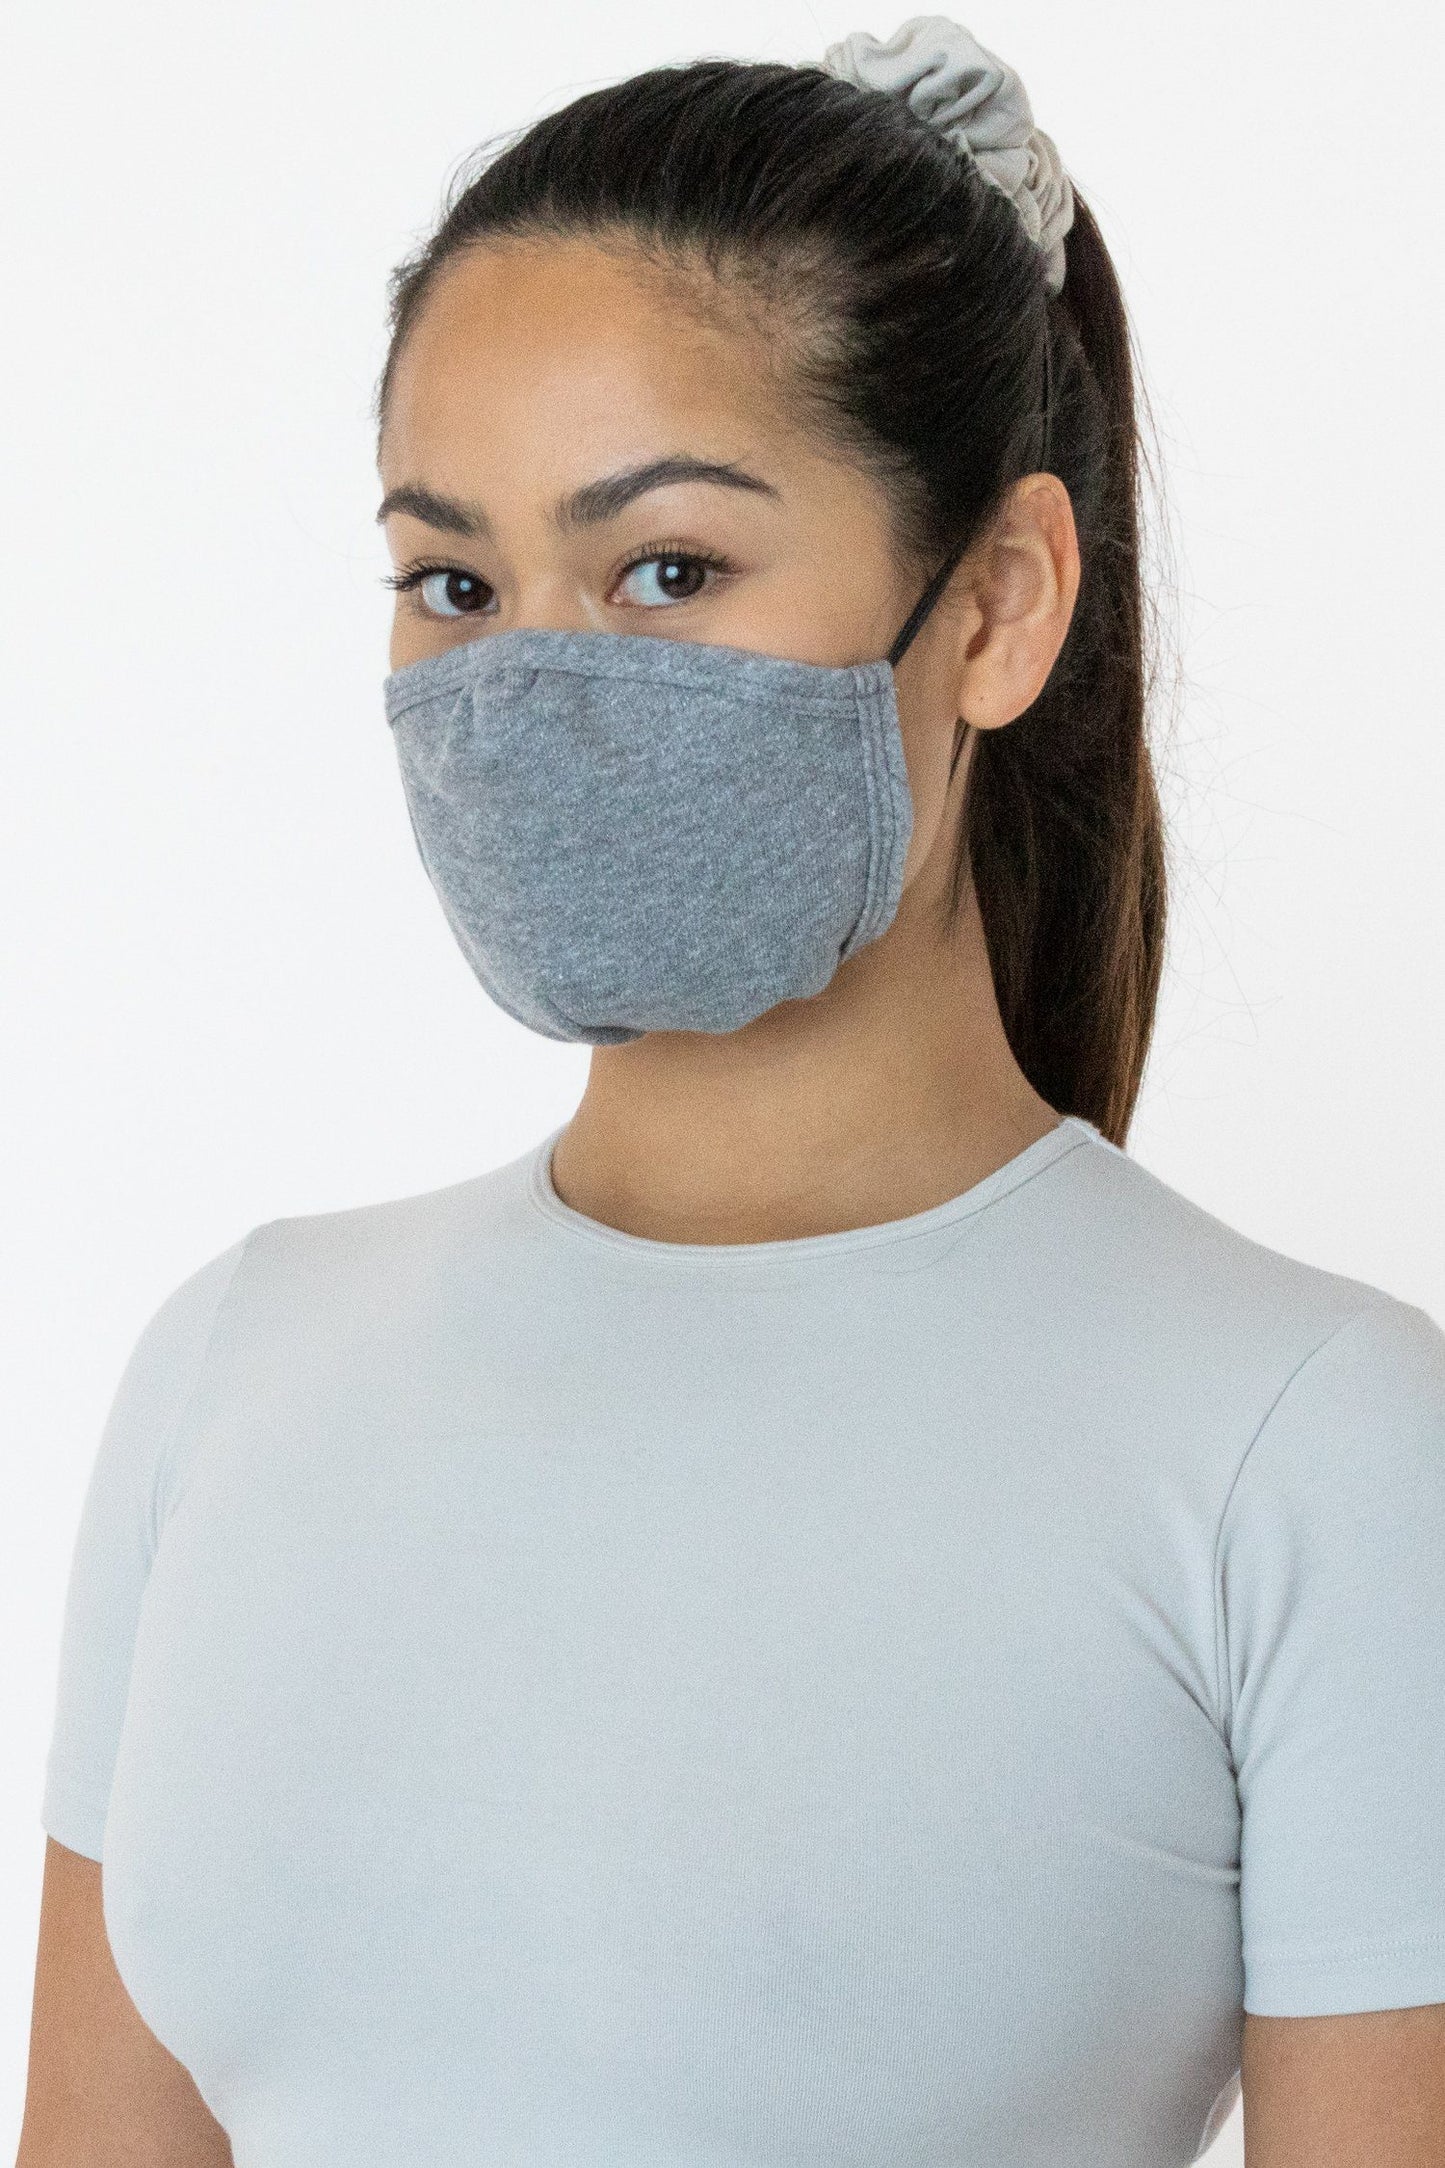 Los Angeles Apparel - Cotton Face Mask, Heather Grey